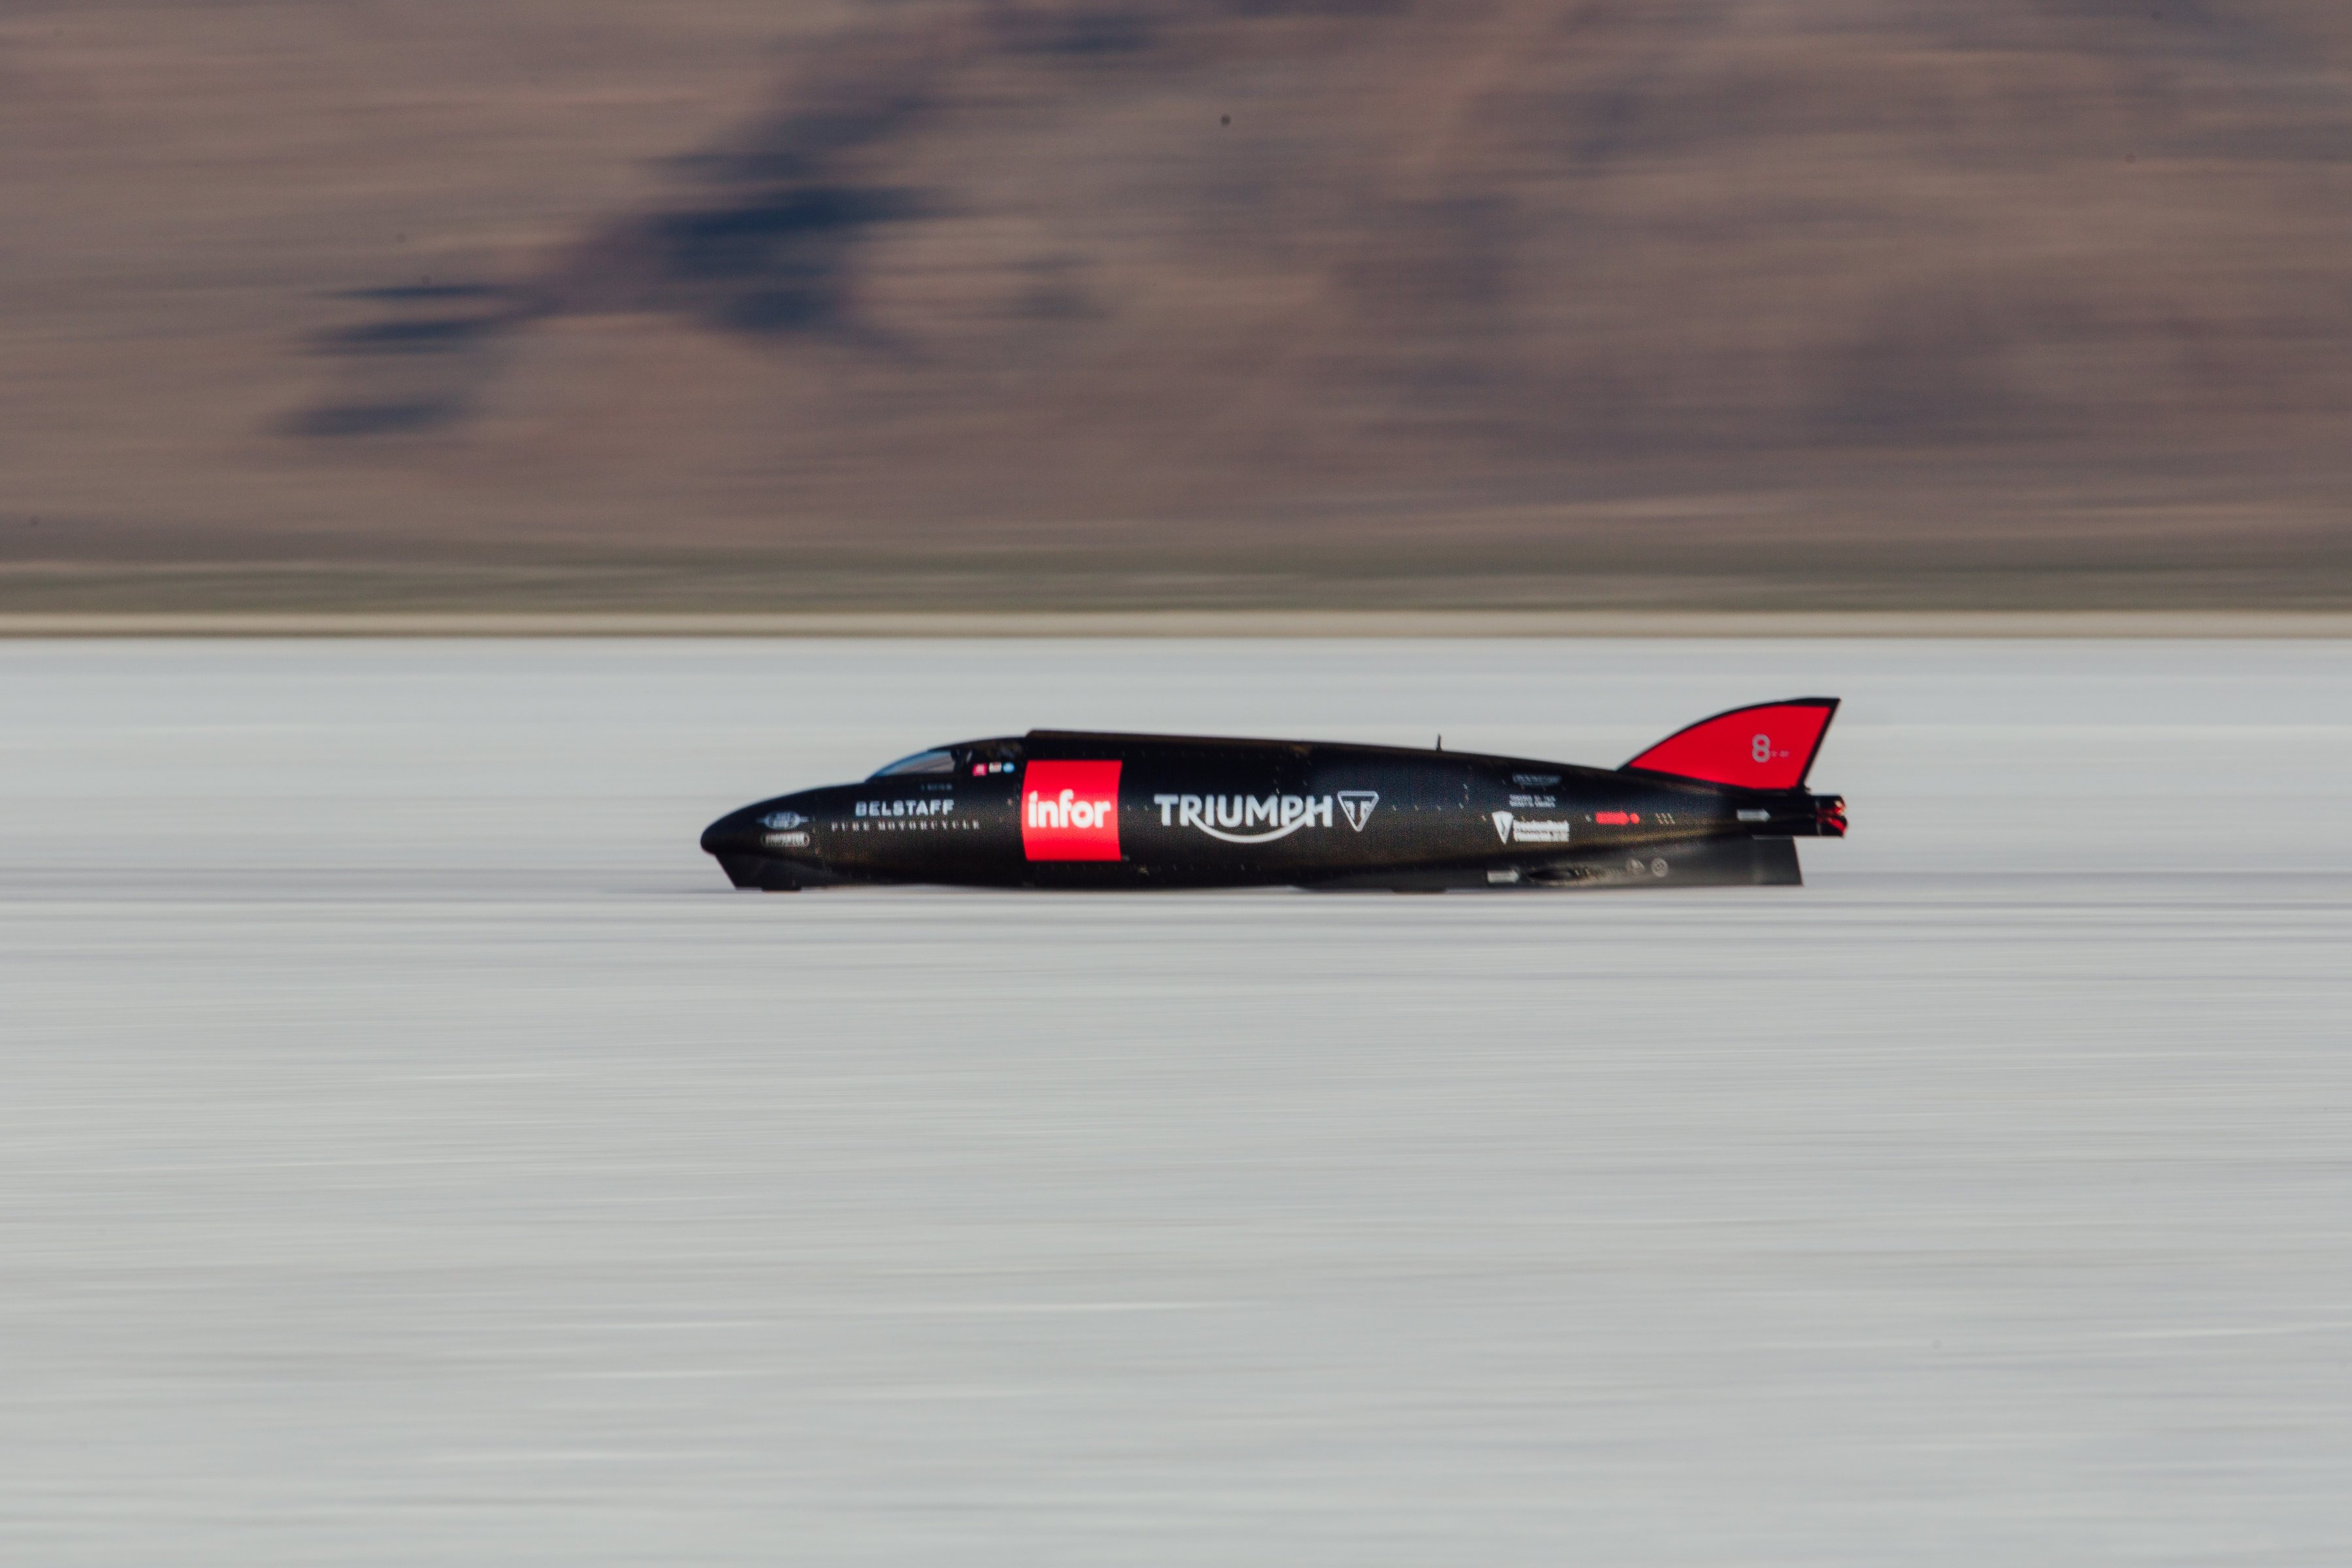 The-worlds-fastest-Triumph-the-Triumph-Infor-Rocket-Streamliner1.jpg